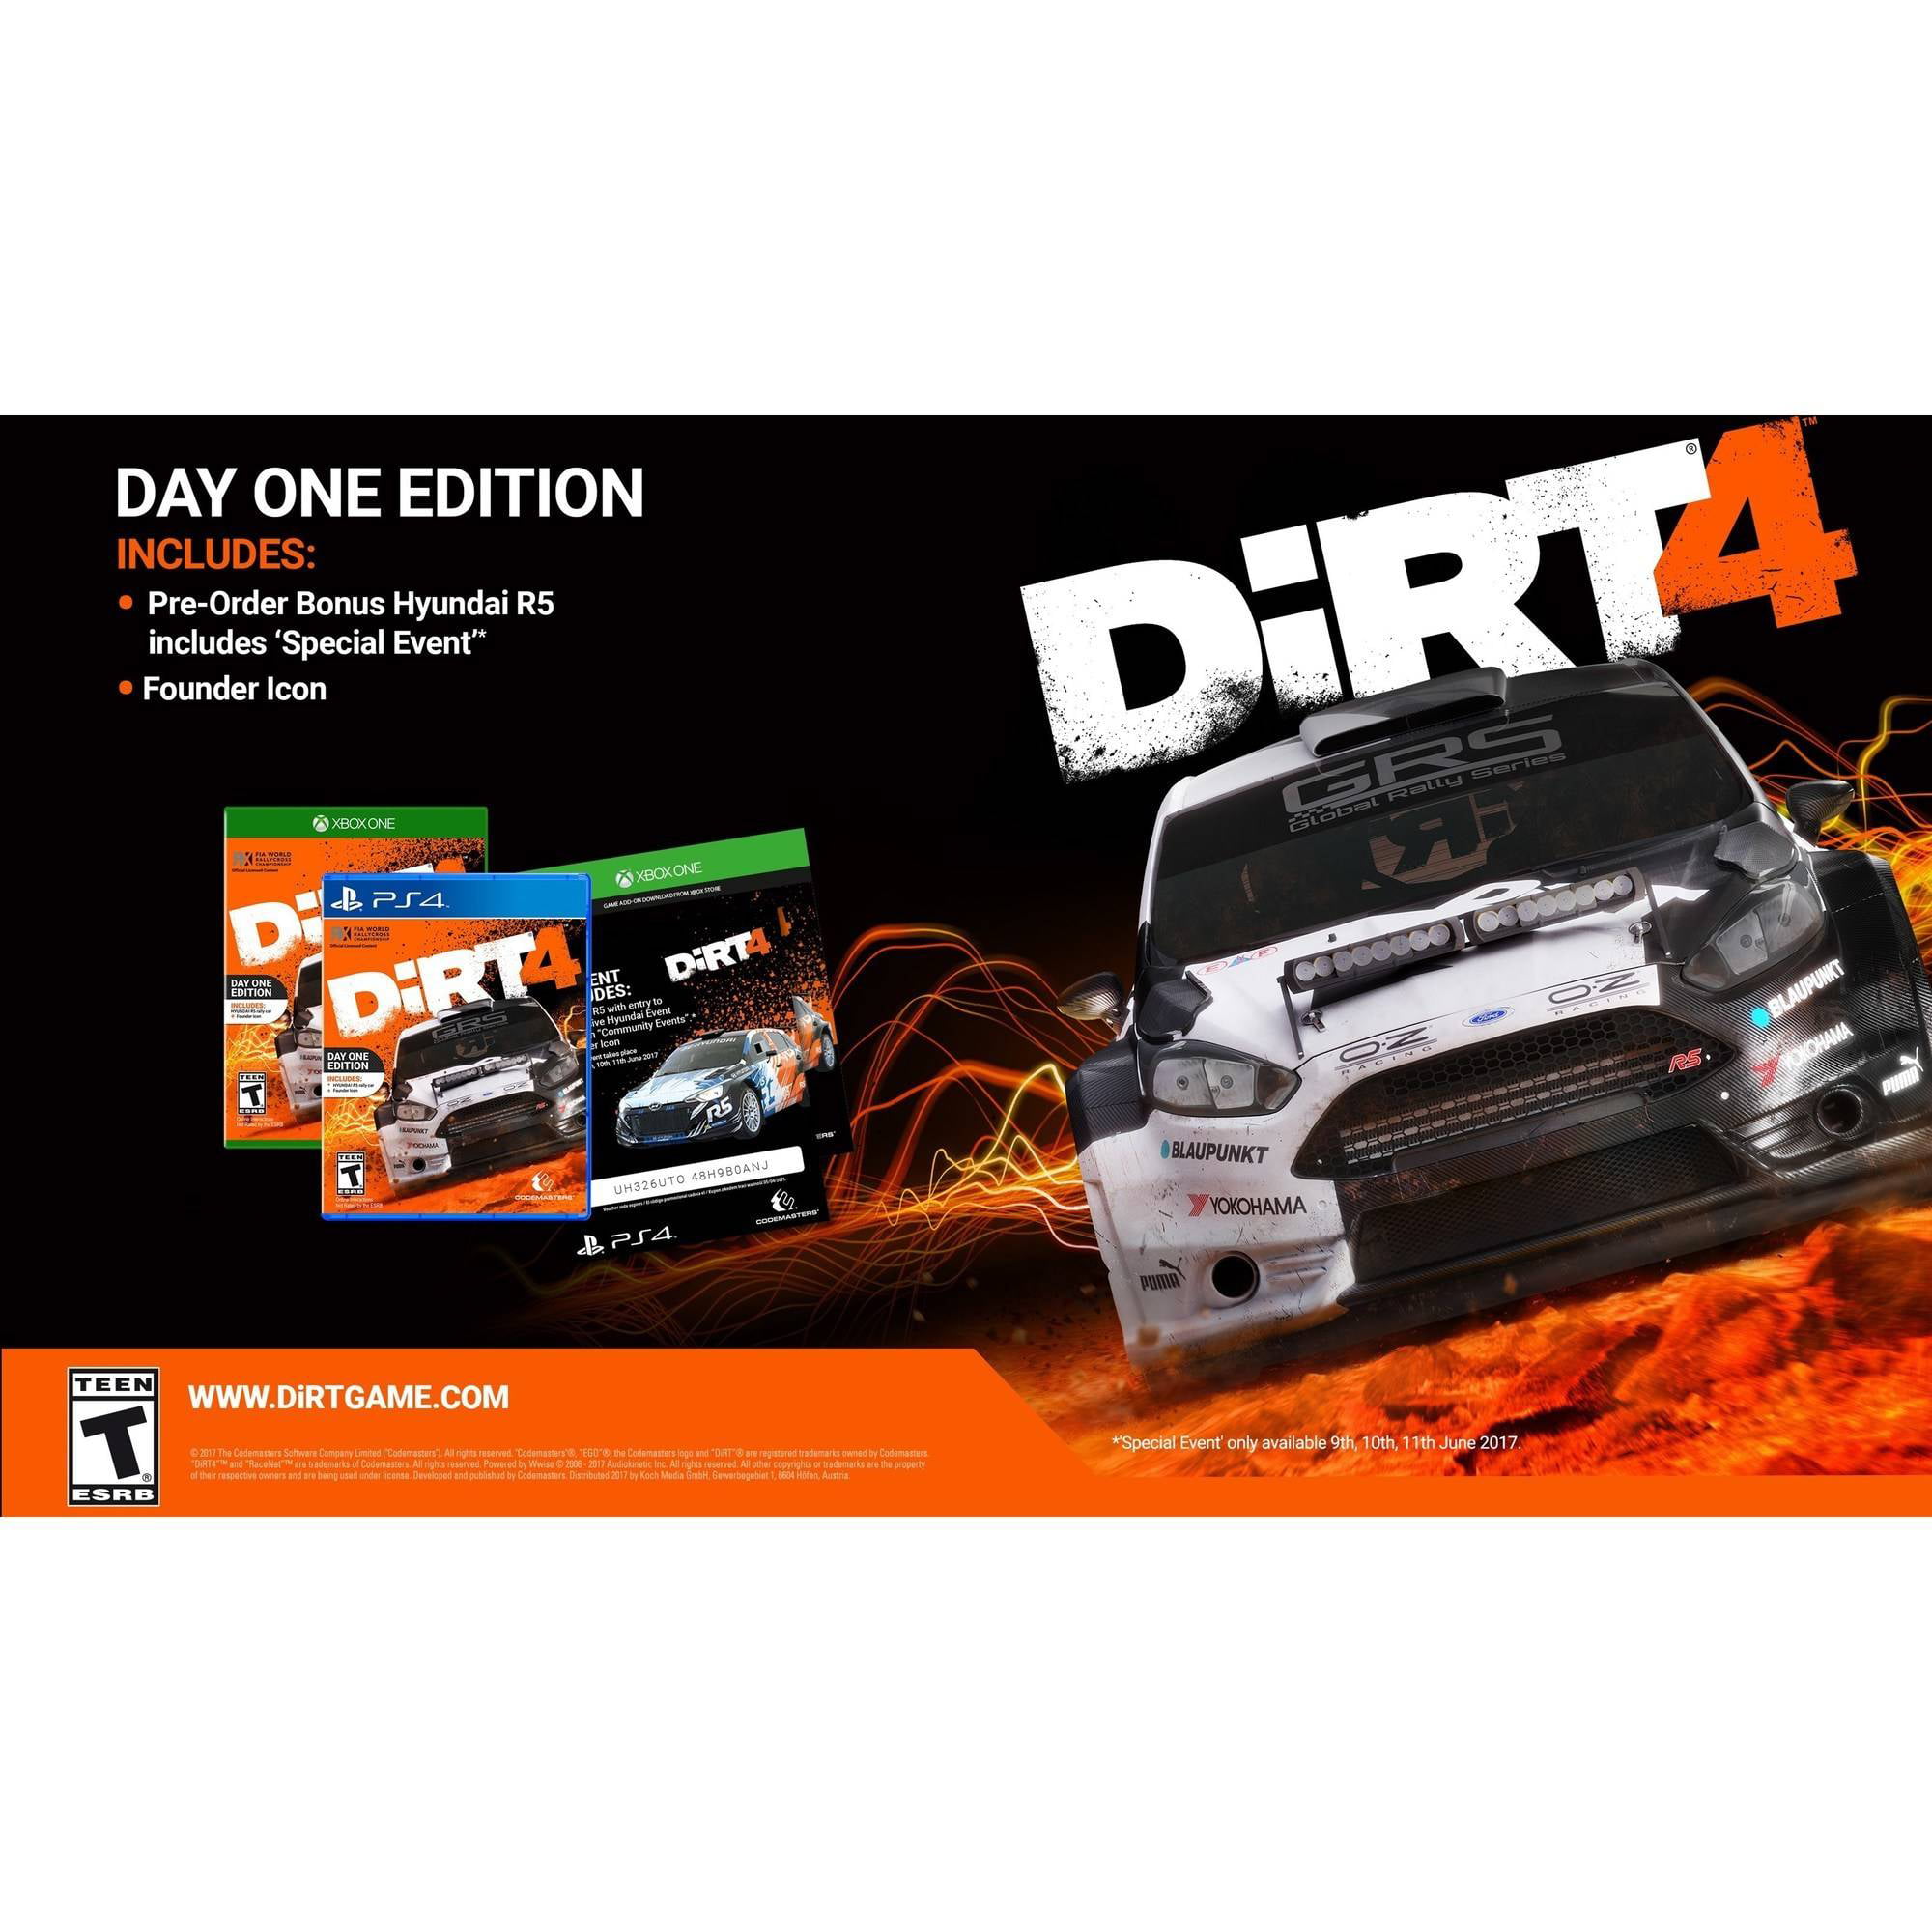 Settlers tag Mangle Dirt 4 for PlayStation 4 - Walmart.com